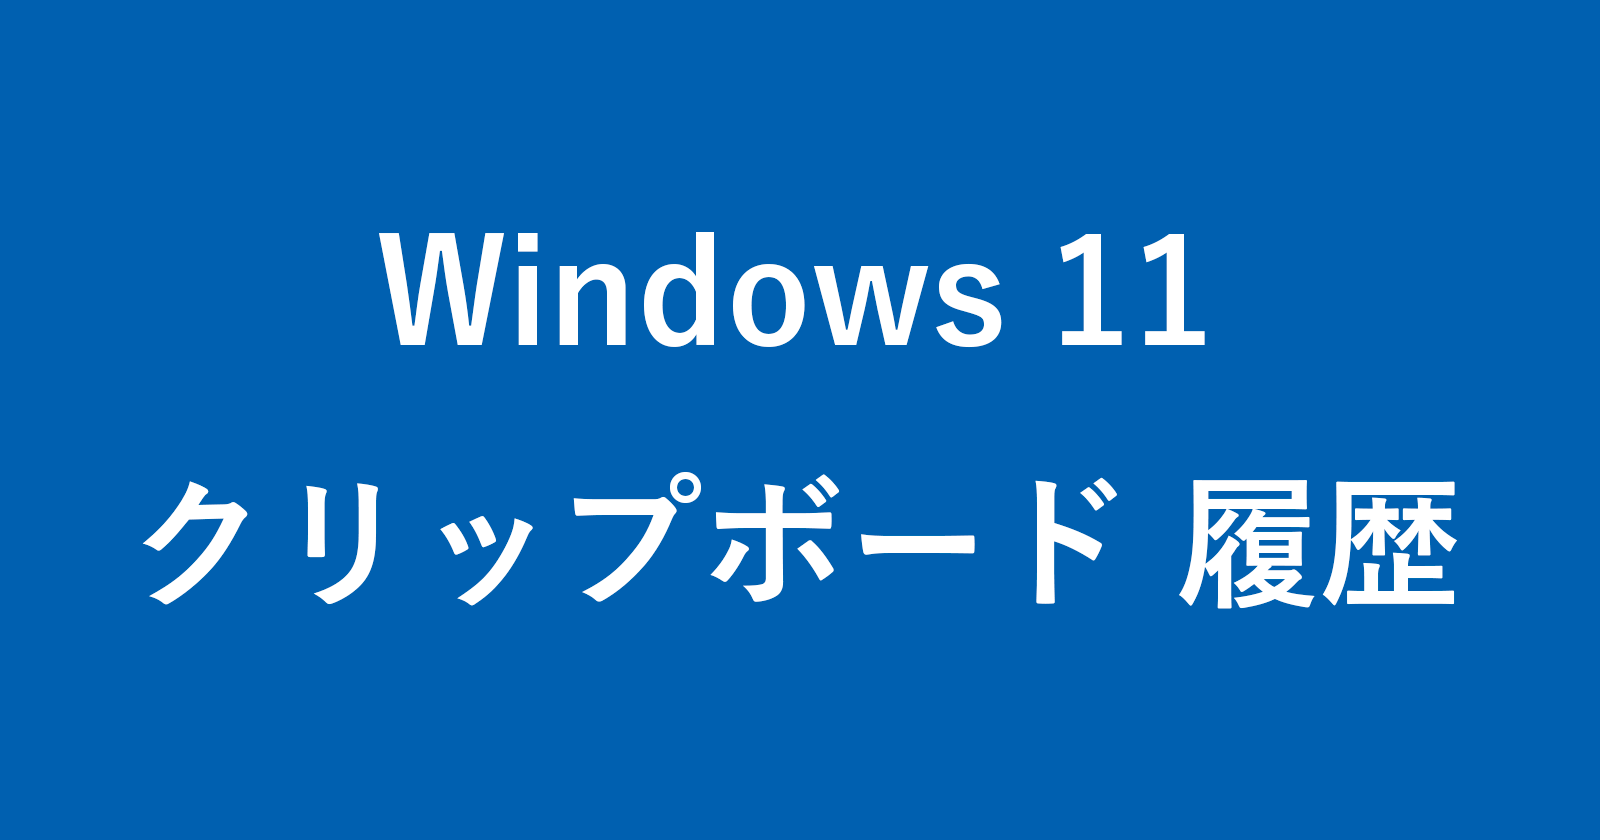 windows 11 clipboard history